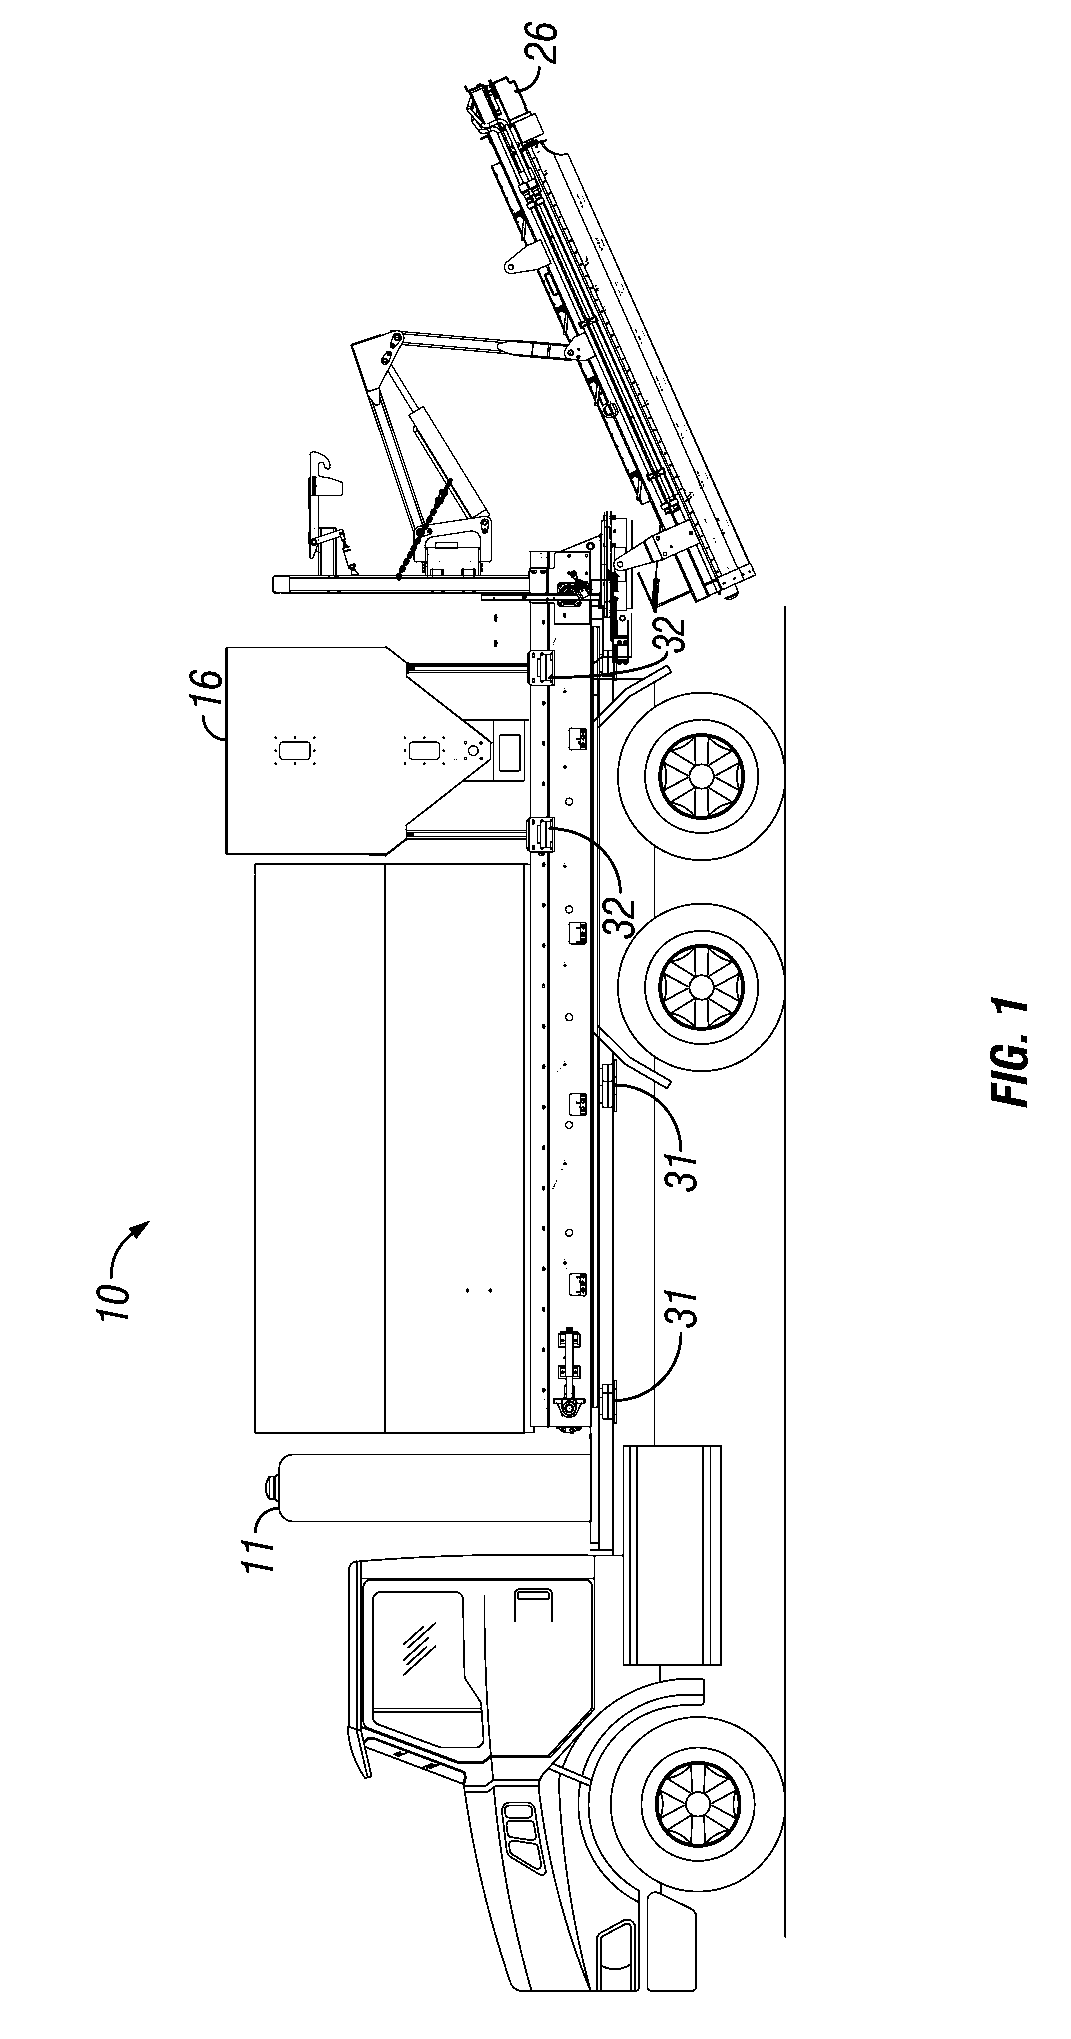 Volumetric concrete mixing method and apparatus